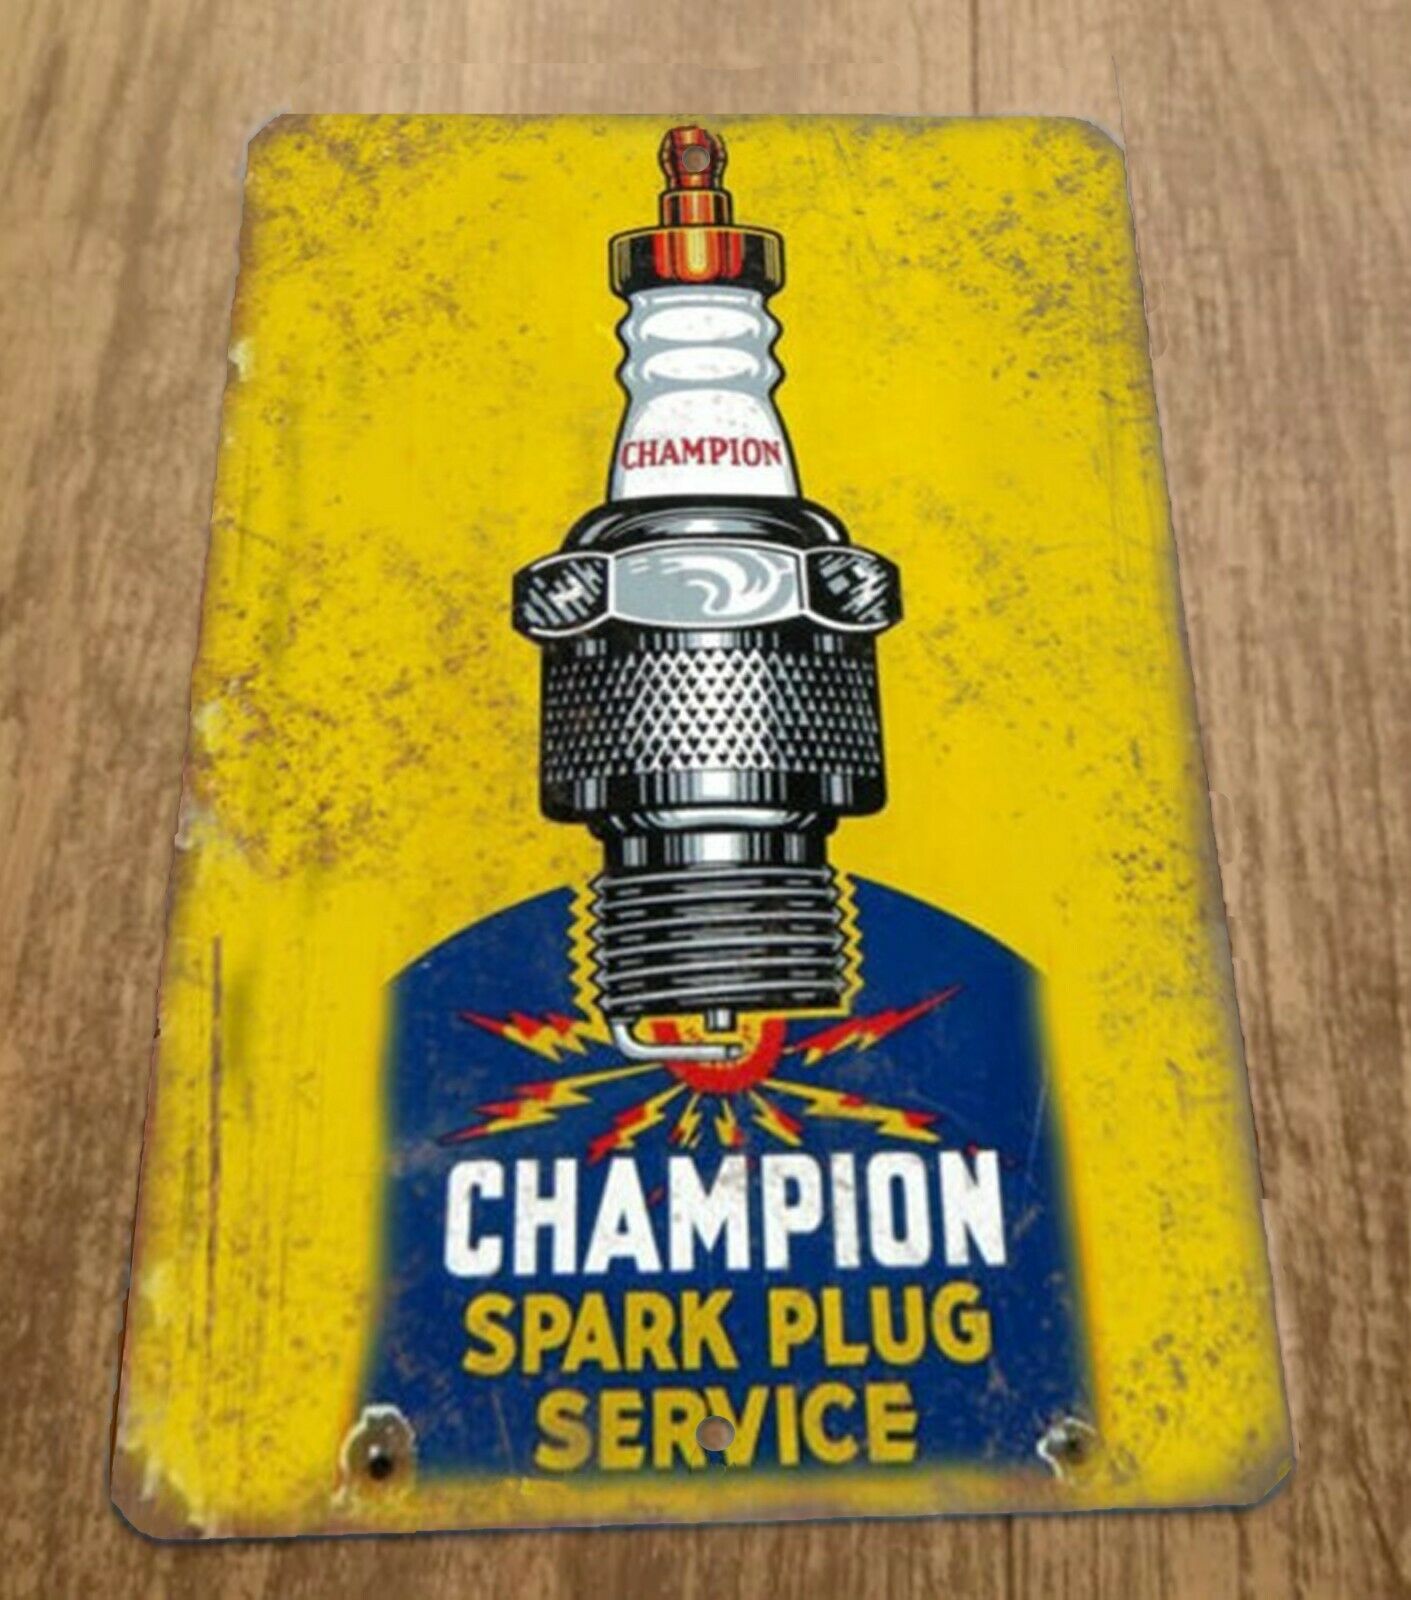 Champion Spark Plug Service Vintage 8x12 Metal Wall Sign Garage Poster